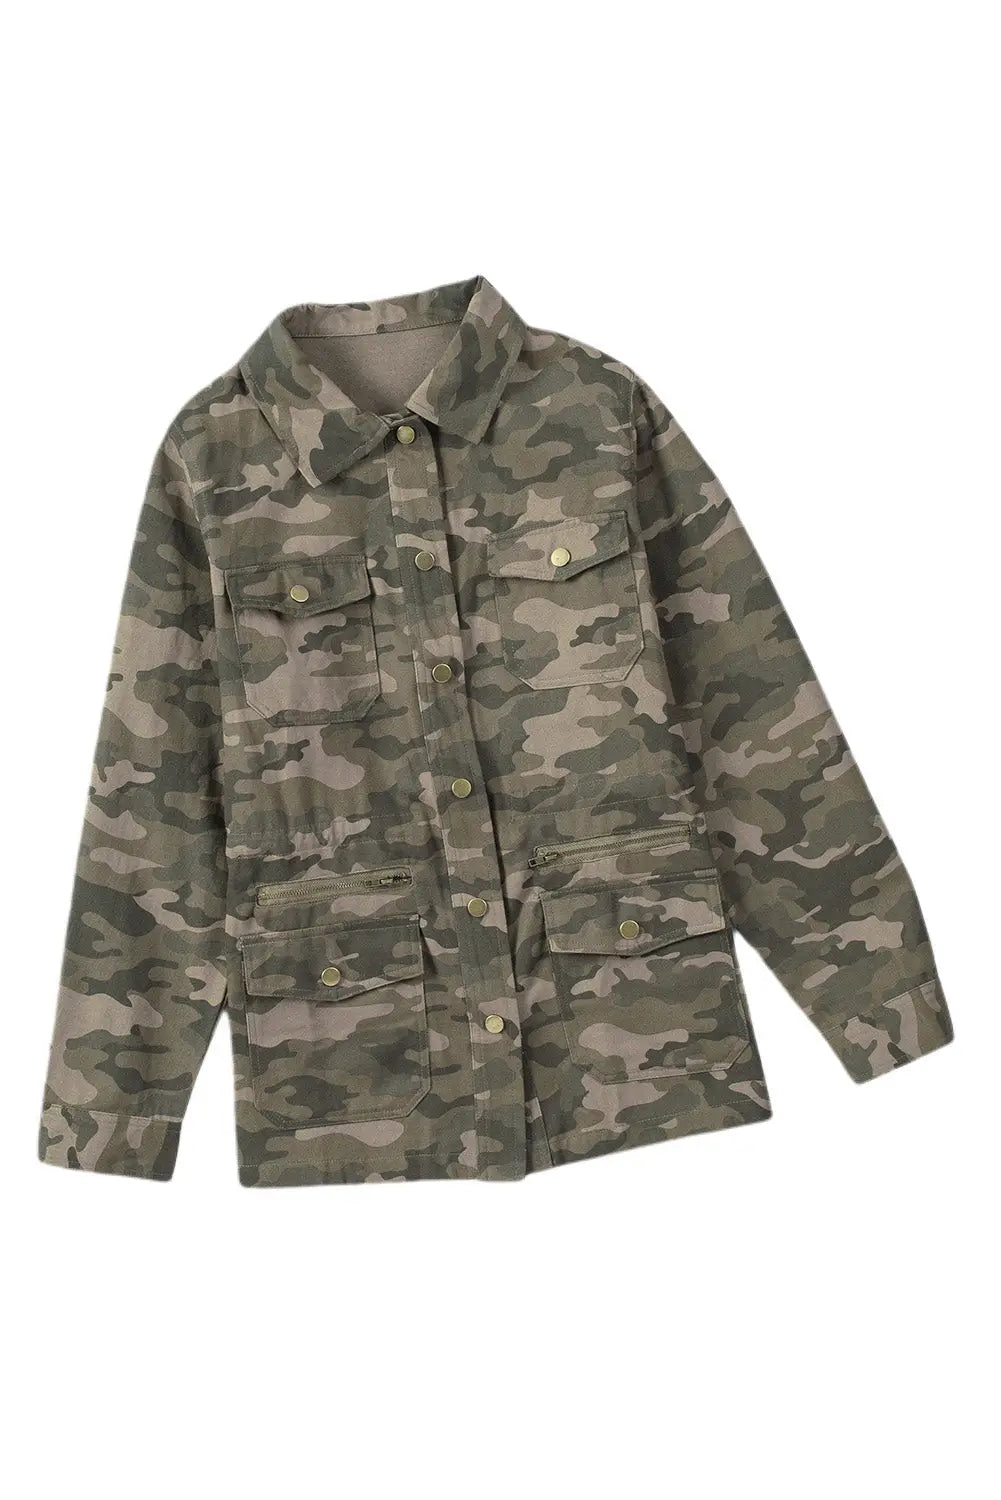 Green camo print multi pockets button-up jacket - lightweight jackets